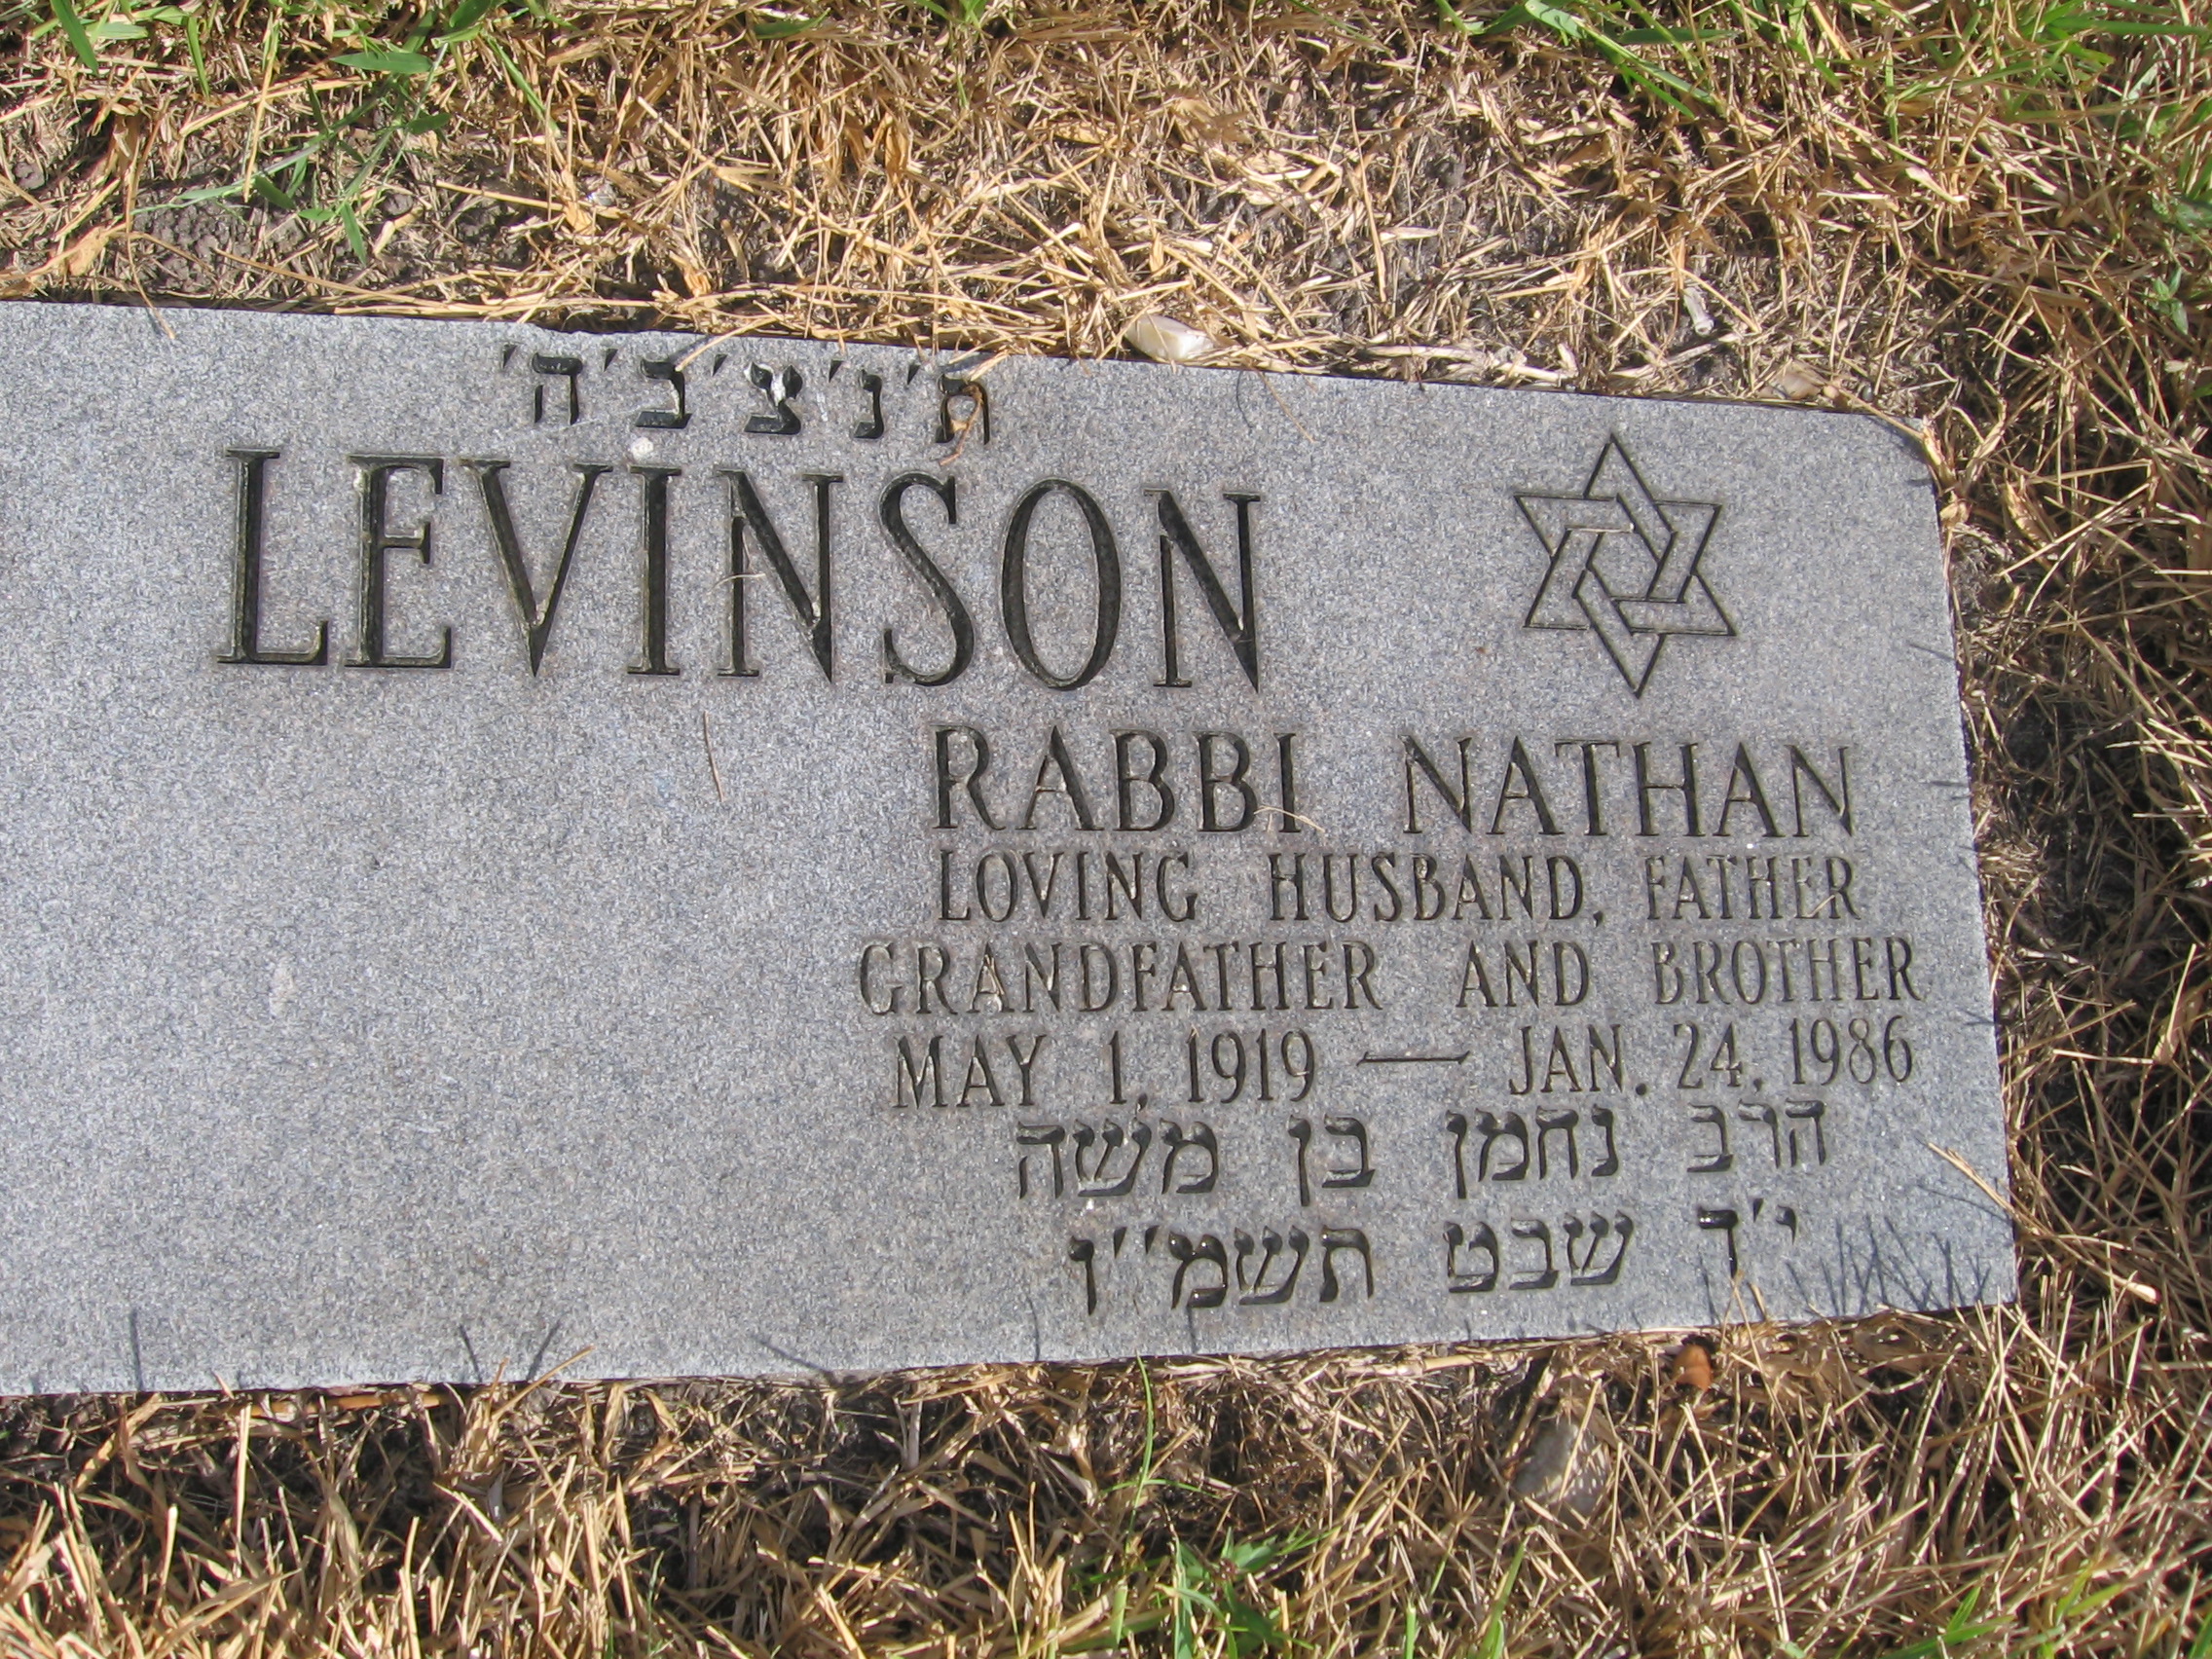 Rabbi Nathan Levinson